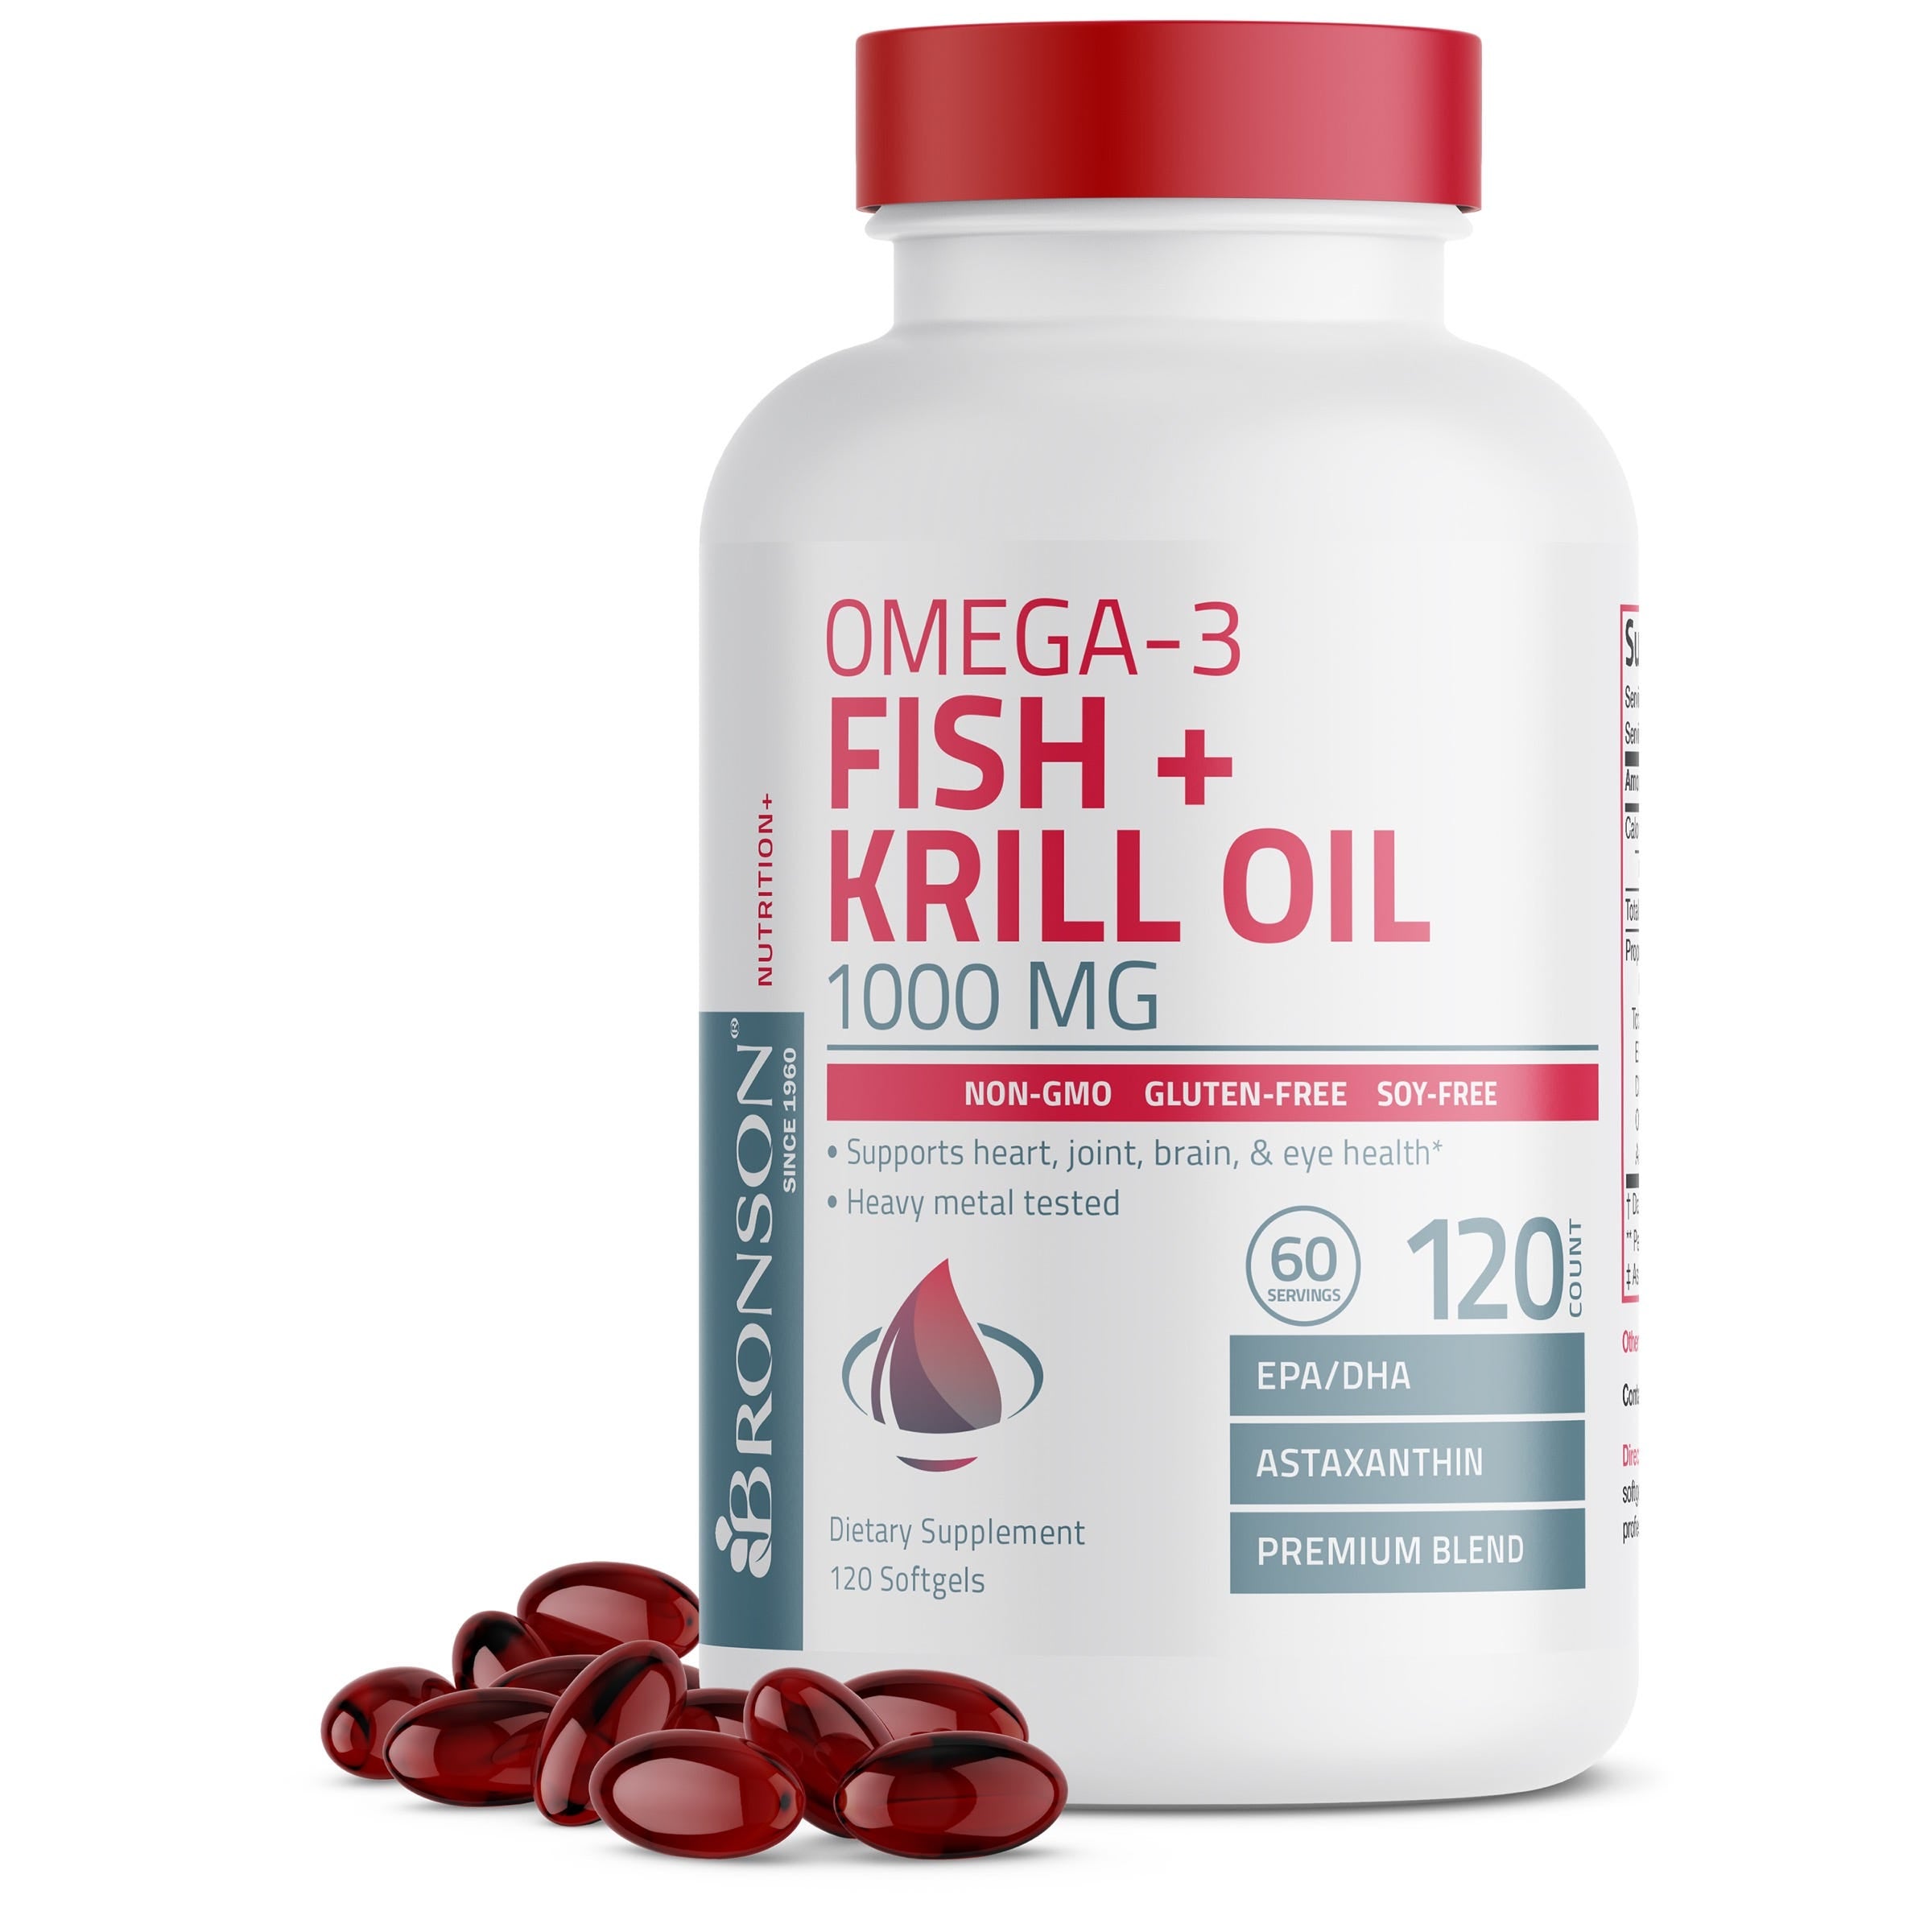 Omega-3 Fish + Krill Oil 1000 MG 120 Softgels view 2 of 7